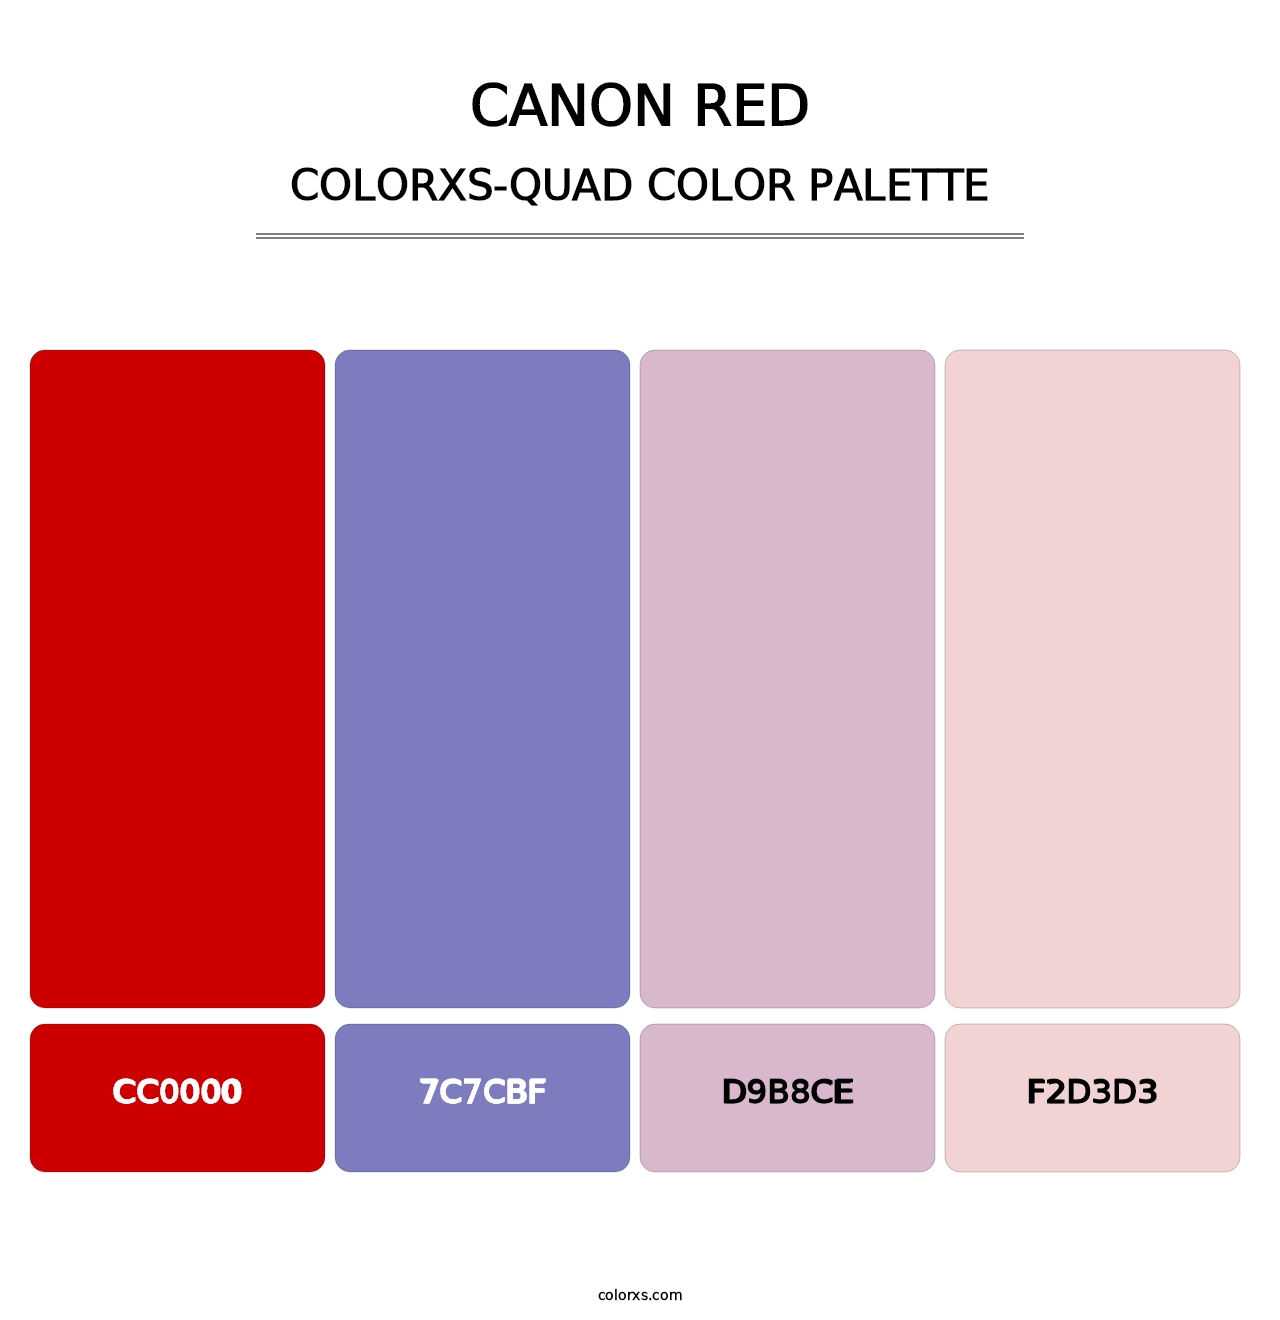 Canon Red - Colorxs Quad Palette